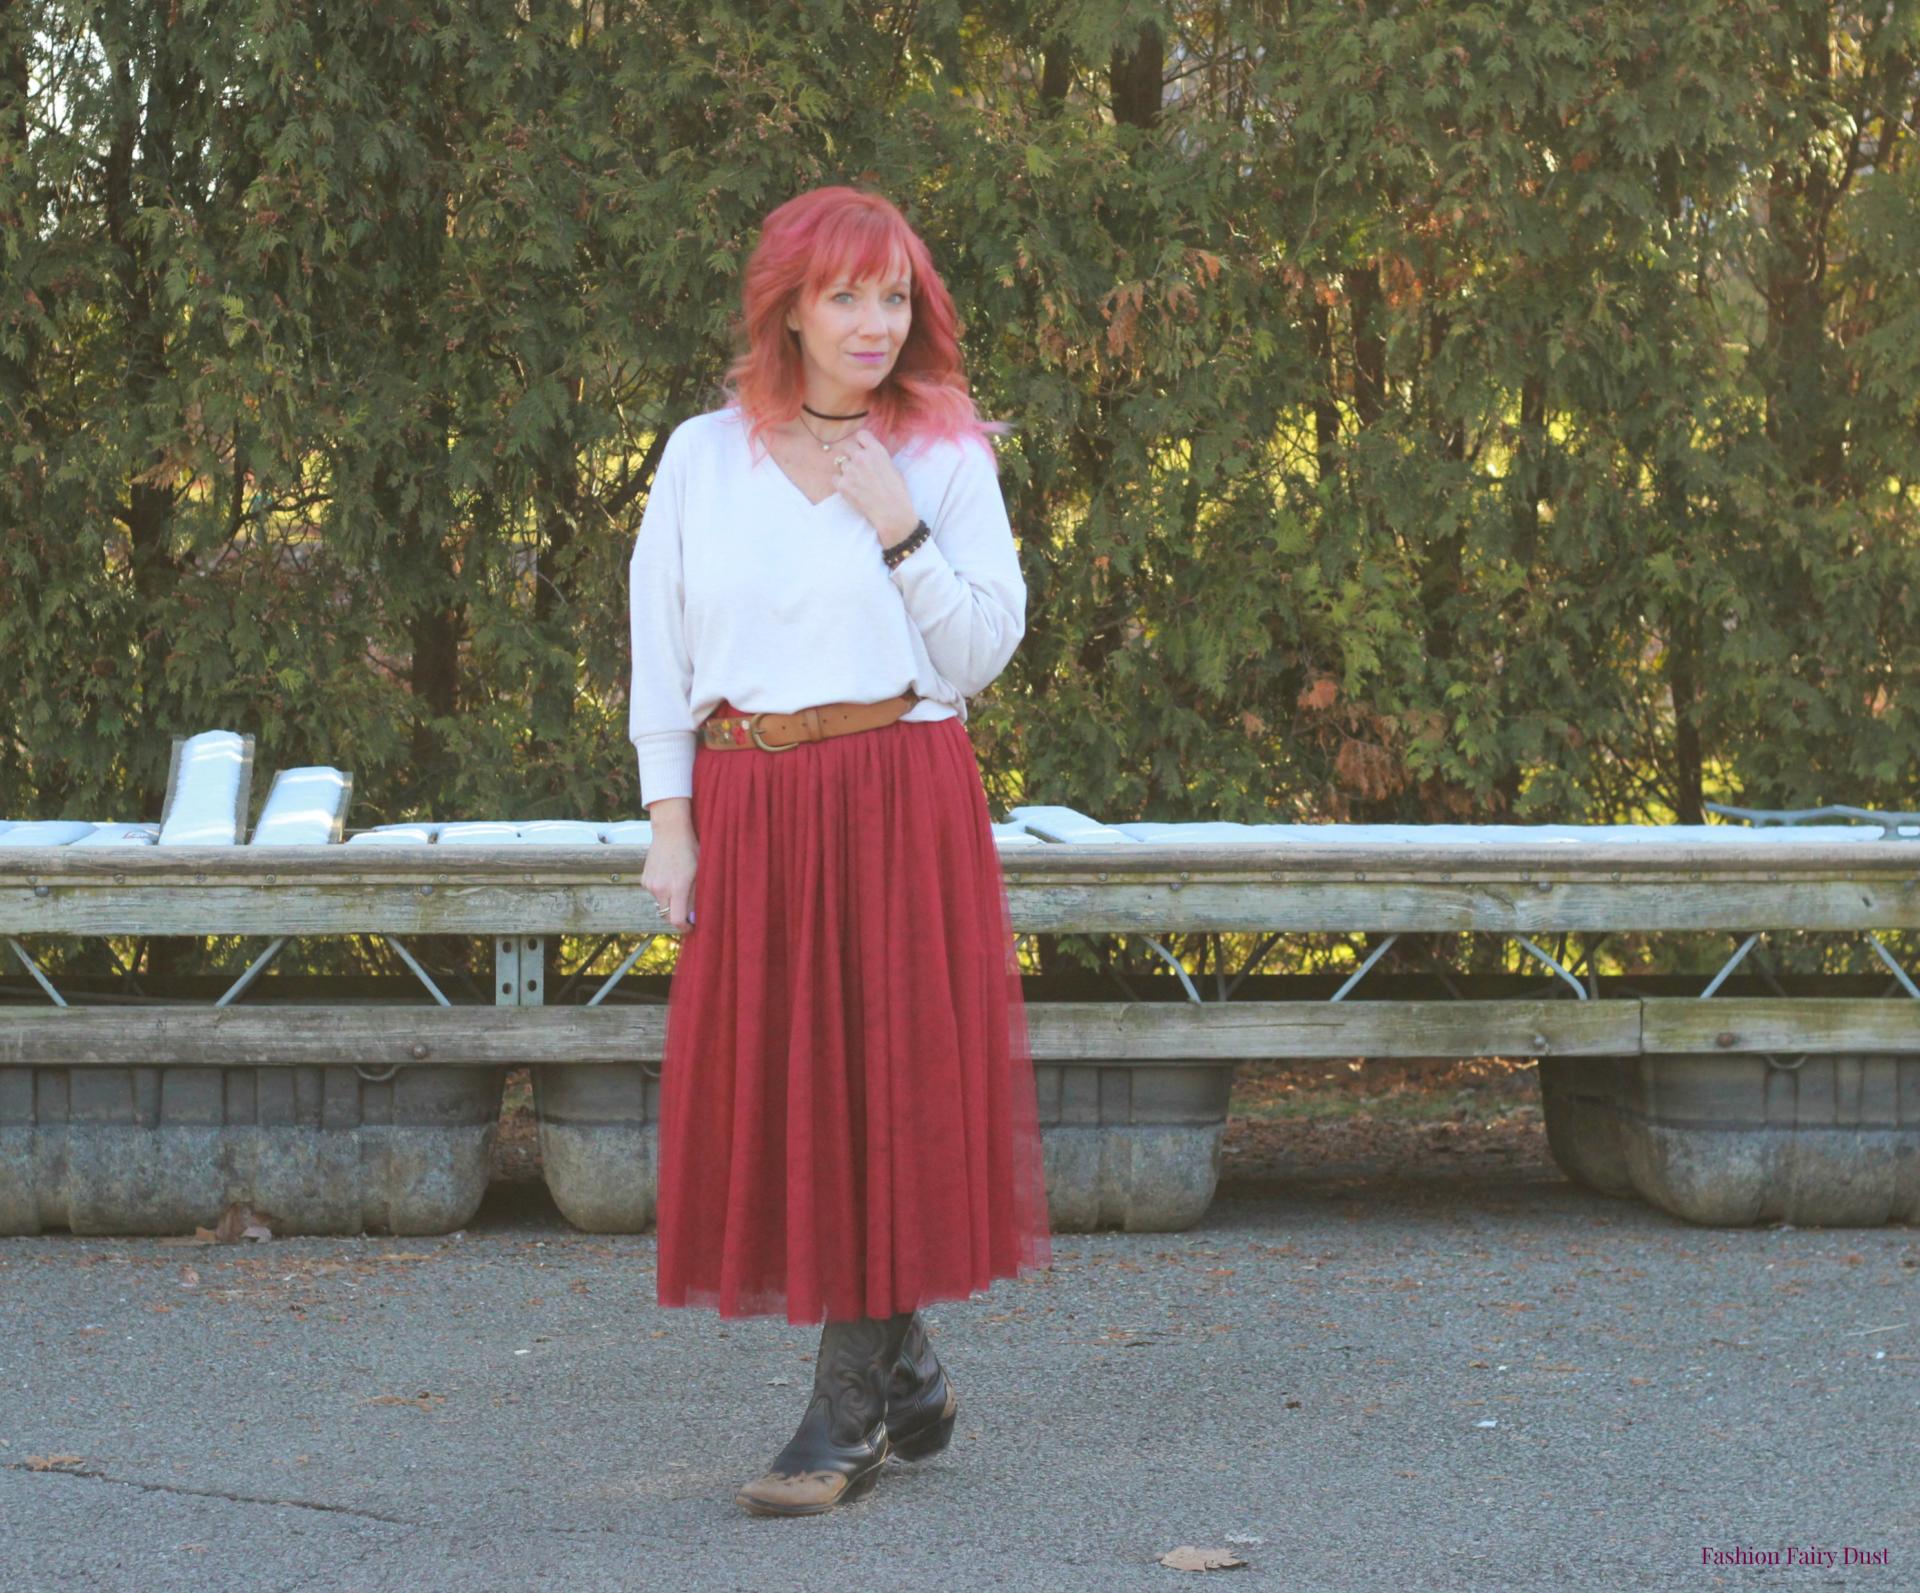 Burgundy tulle skirt, cowboy boots and sweatshirt.